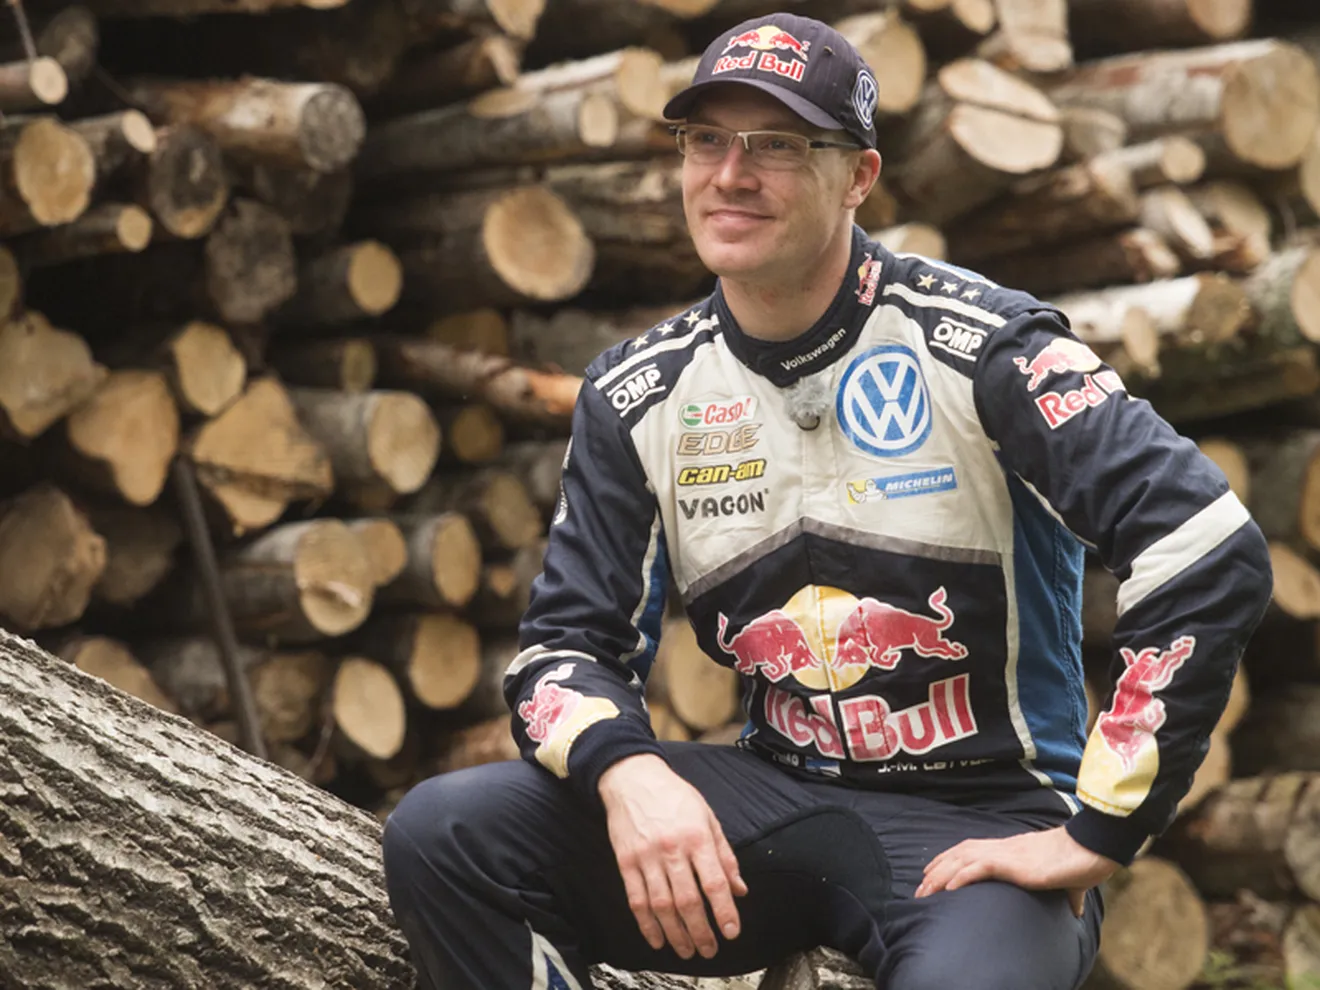 Red Bull seguirá apoyando a Ogier, Latvala y Mikkelsen